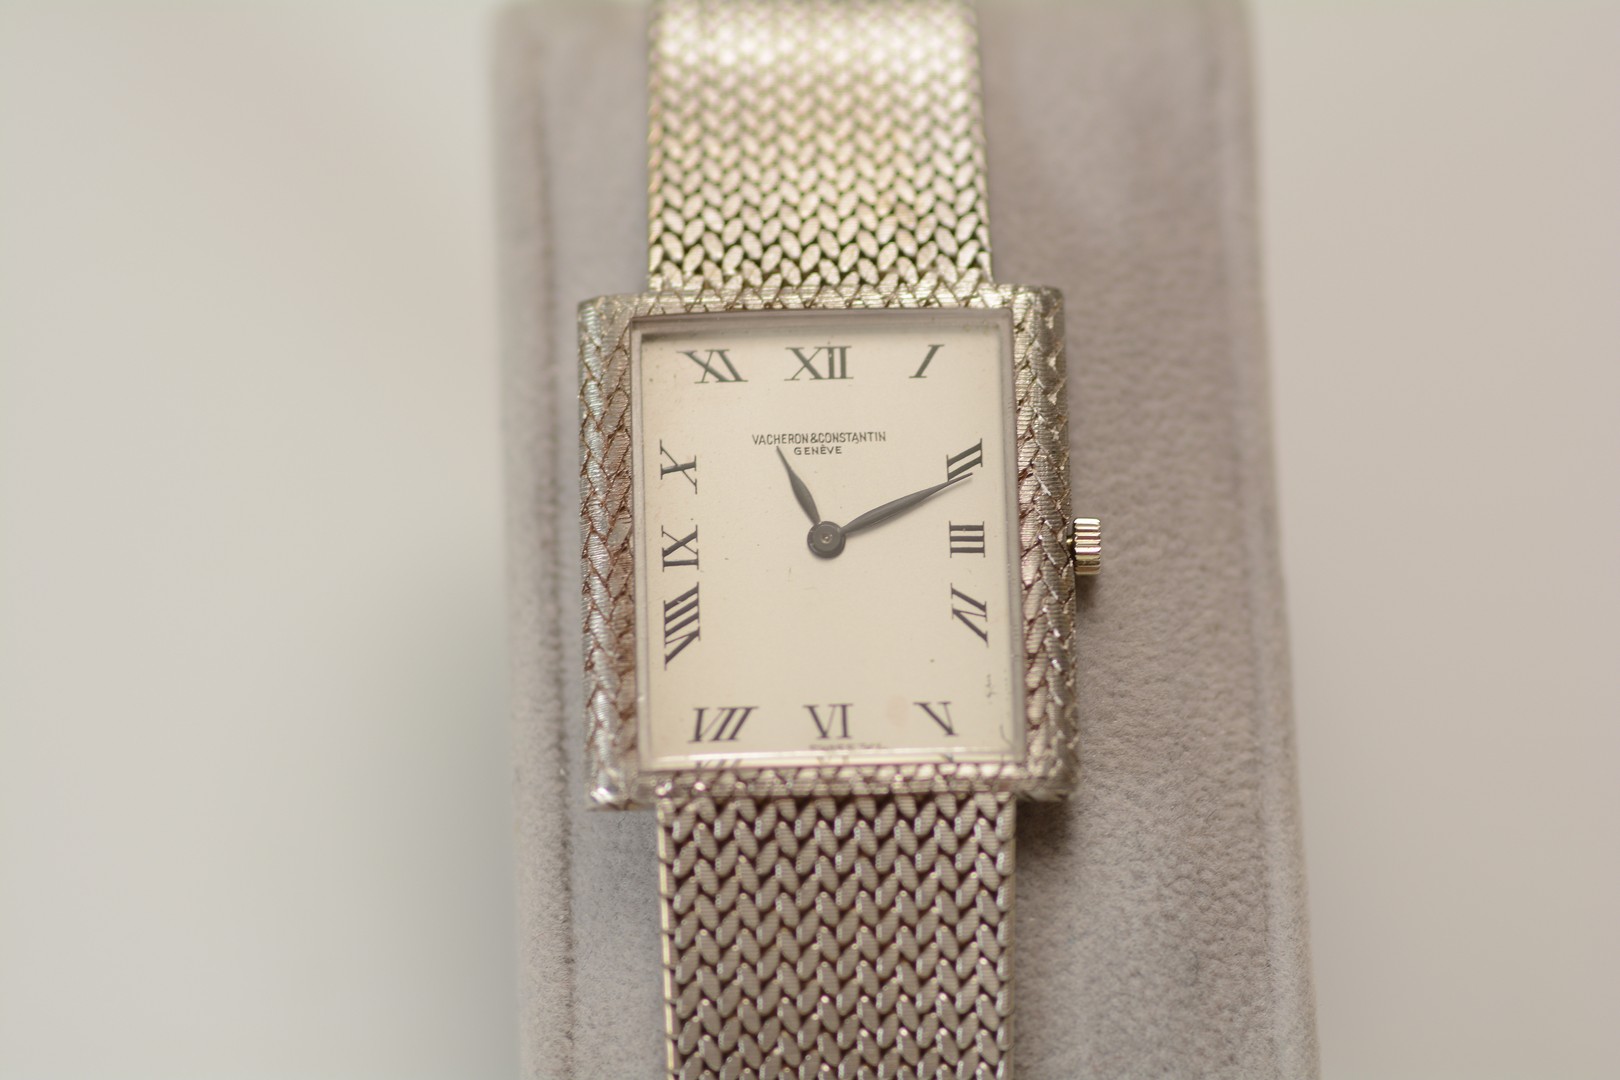 Vacheron Constantin / Rectangular - Ultra thin - 1960s - Unisex White gold Wrist Watch - Image 5 of 12